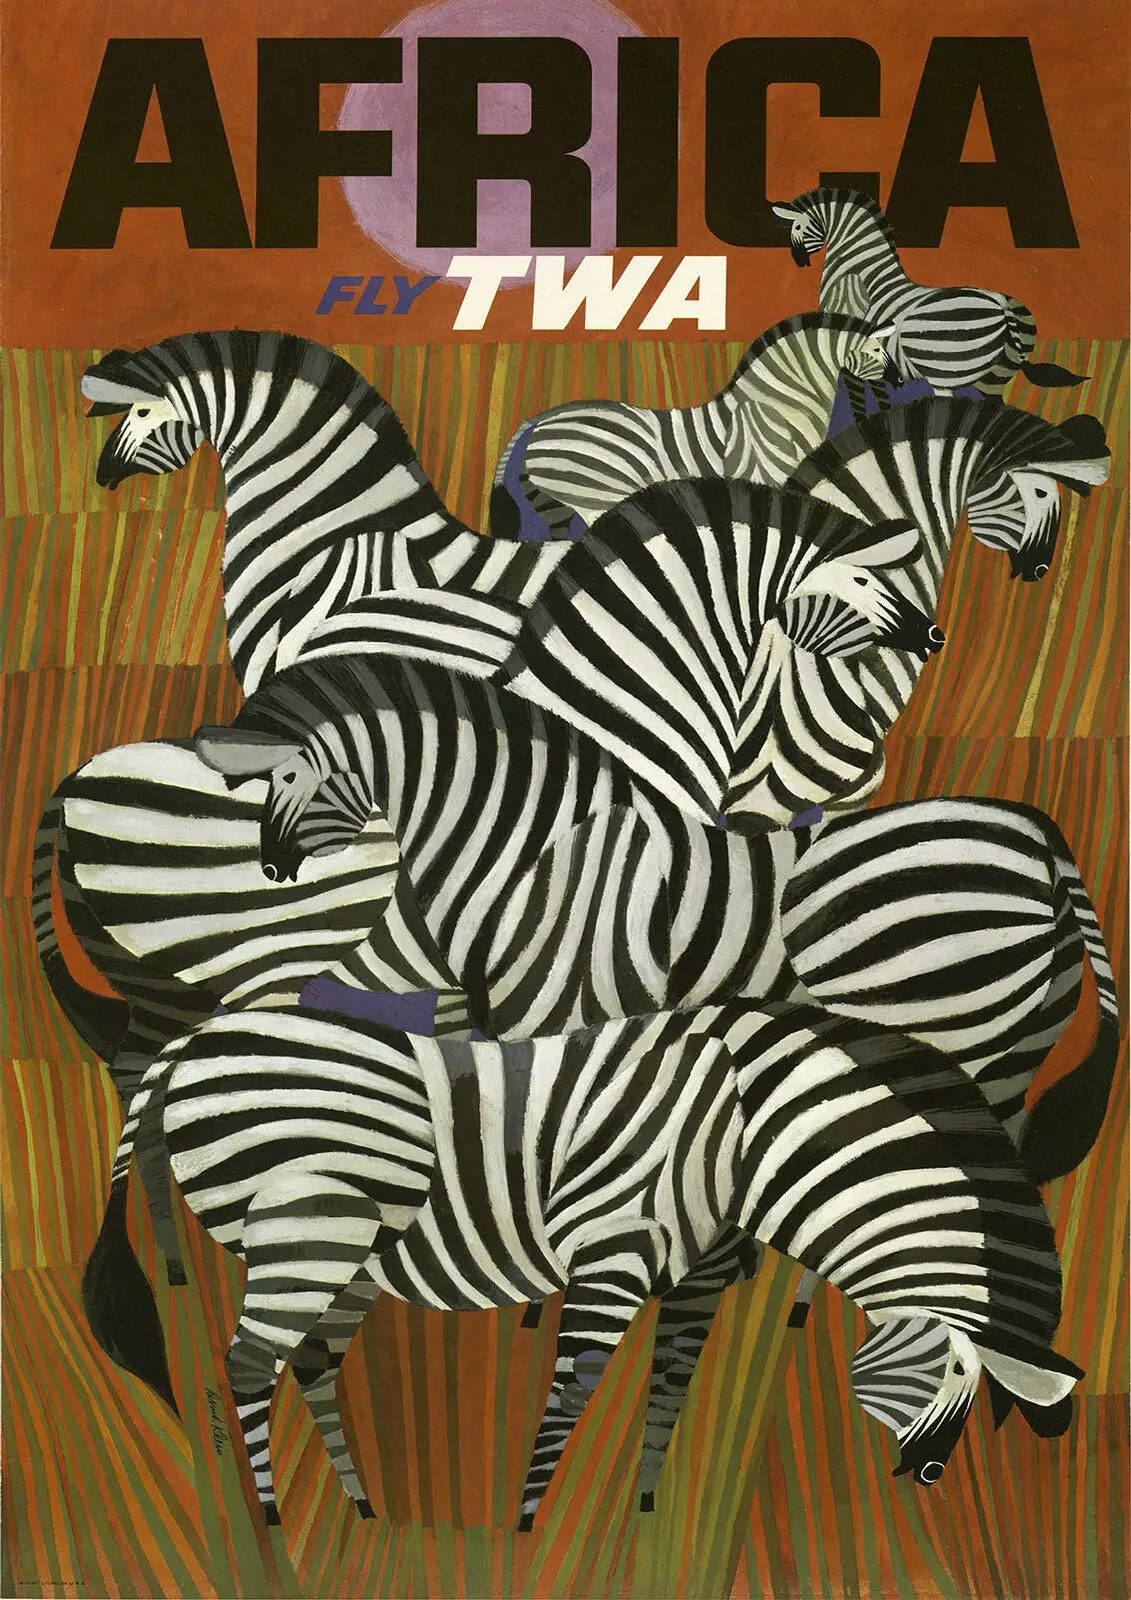 

AFRICA ZEBRA Vintage Retro Travel Railways Photo Art Film Print Silk Poster for Your Home Wall Decor 24x36inch